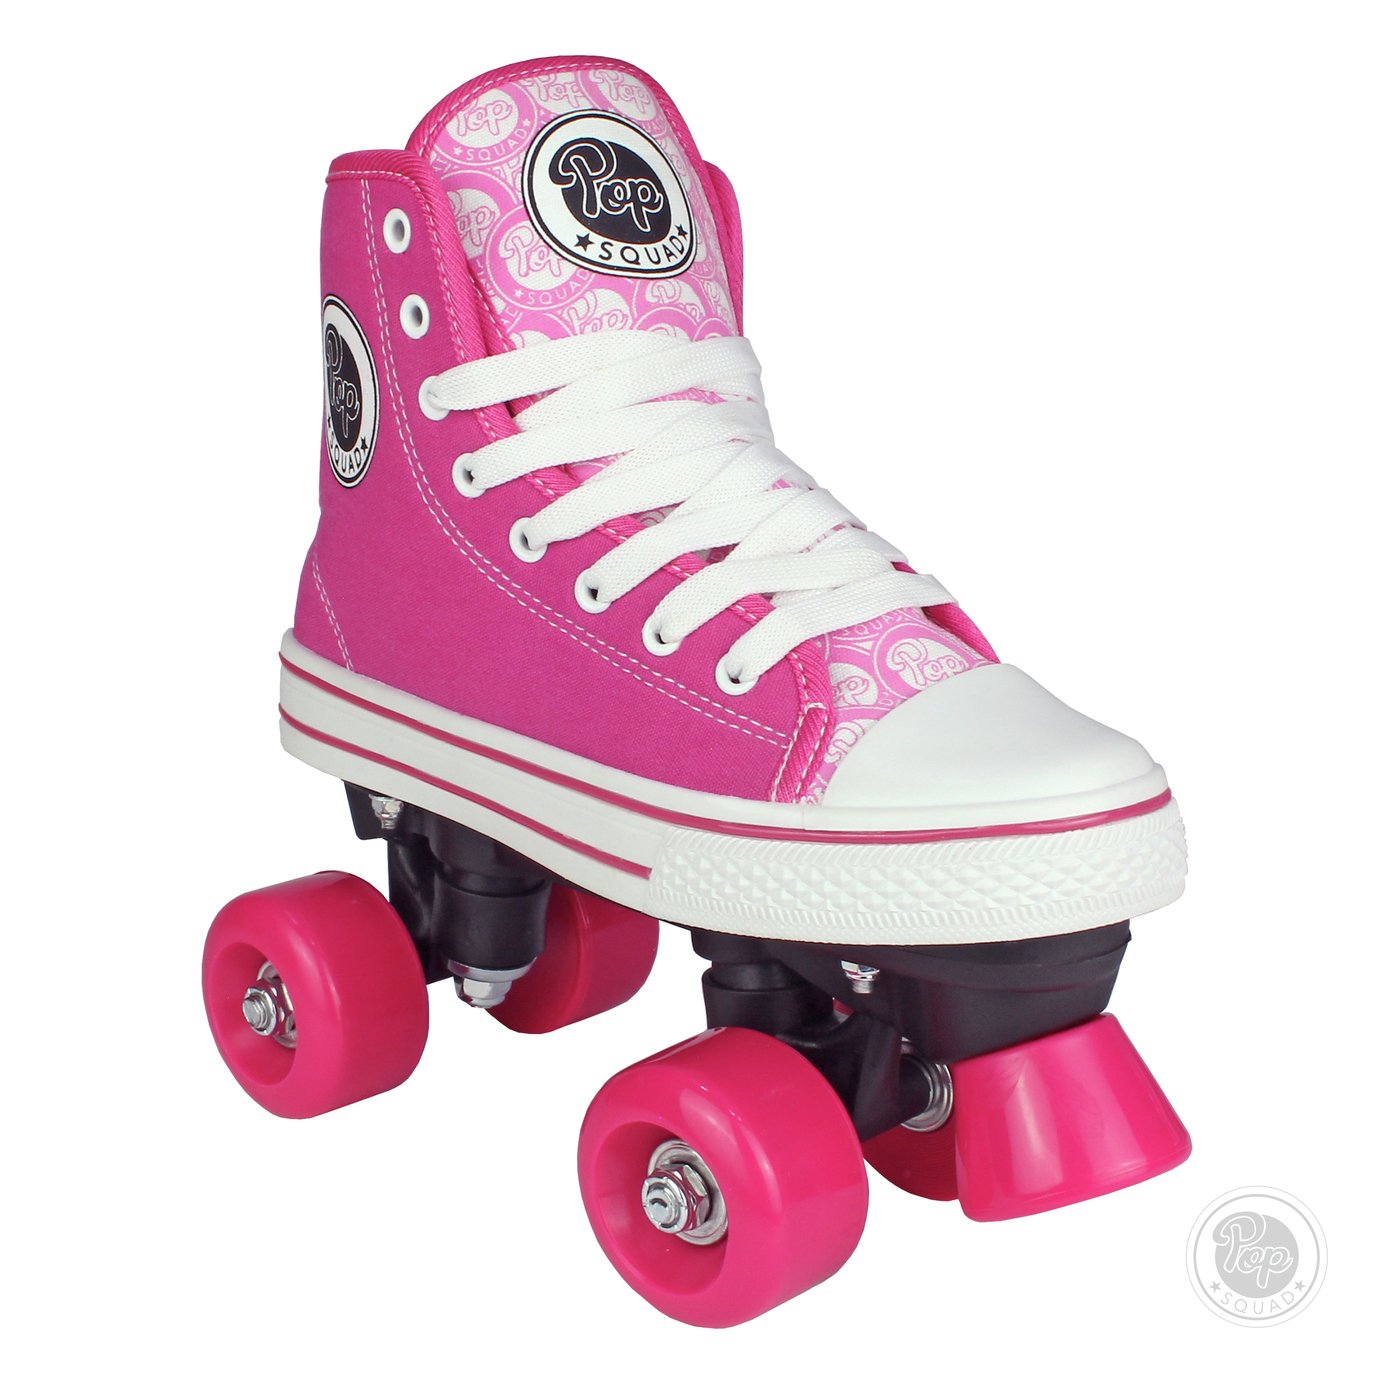 Pop Squad Pink Midtown Quad Skate - Size 5